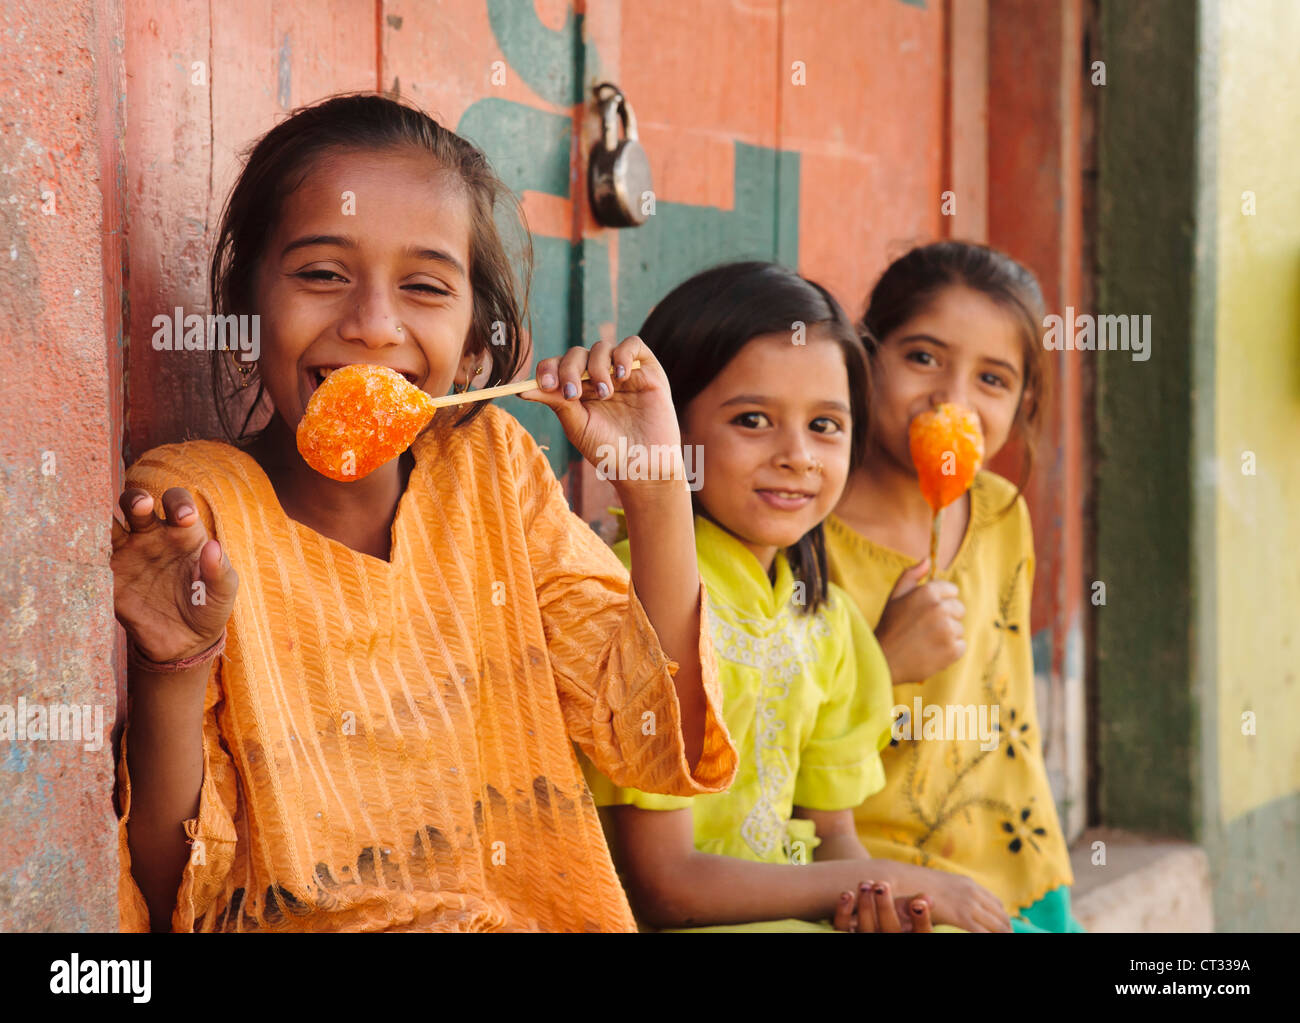 Children enjoying eating sweet lollipops, Gujarat, India Stock Photo